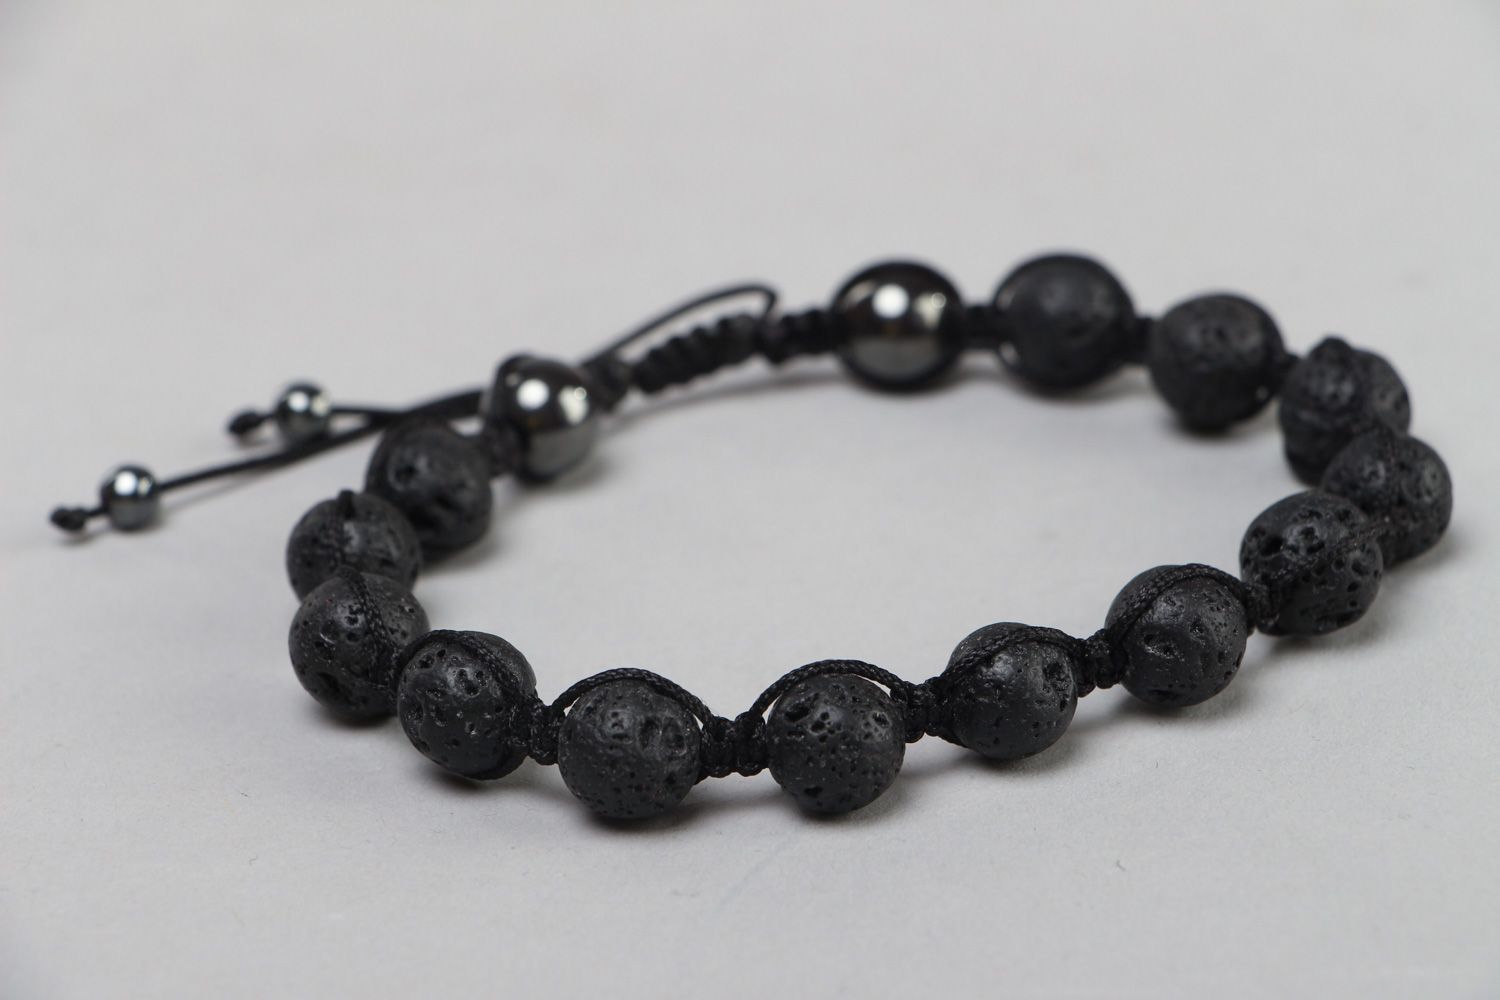 Handmade wrist bracelet with volcanic lava and hematite beads with adjustable size photo 1